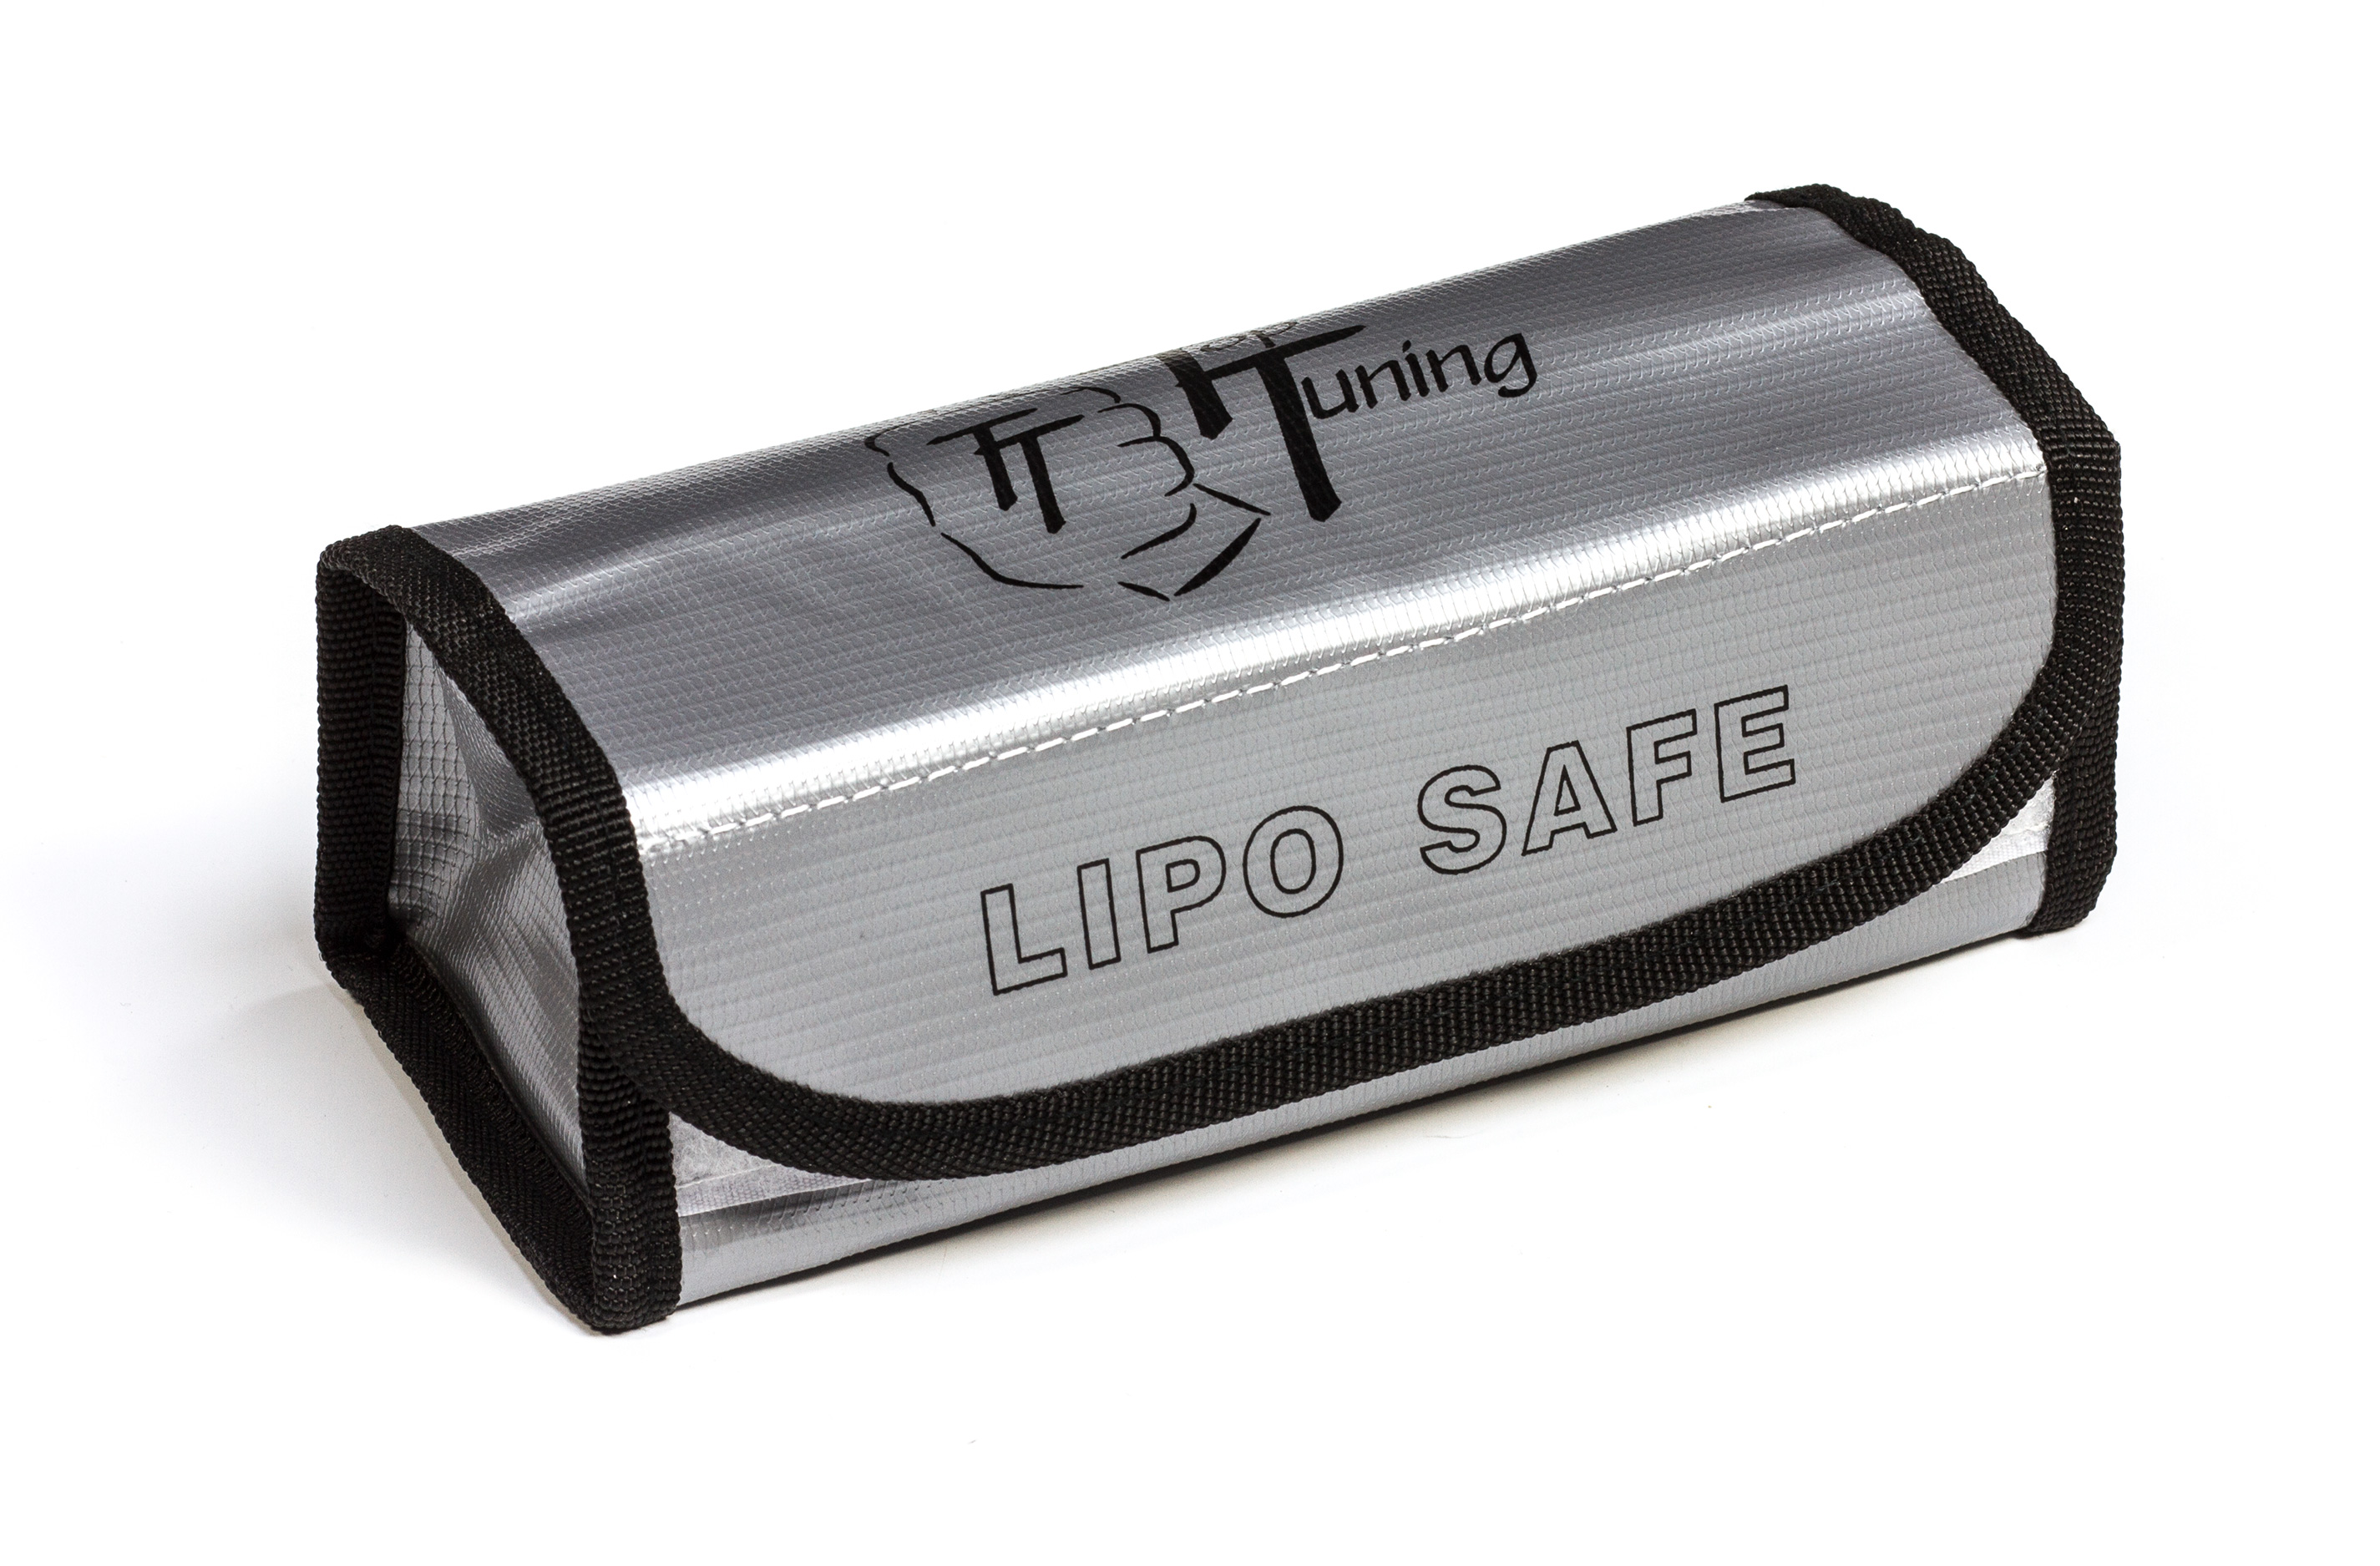 TT1499 Top Tuning Safety Bag für LiPo Akkus